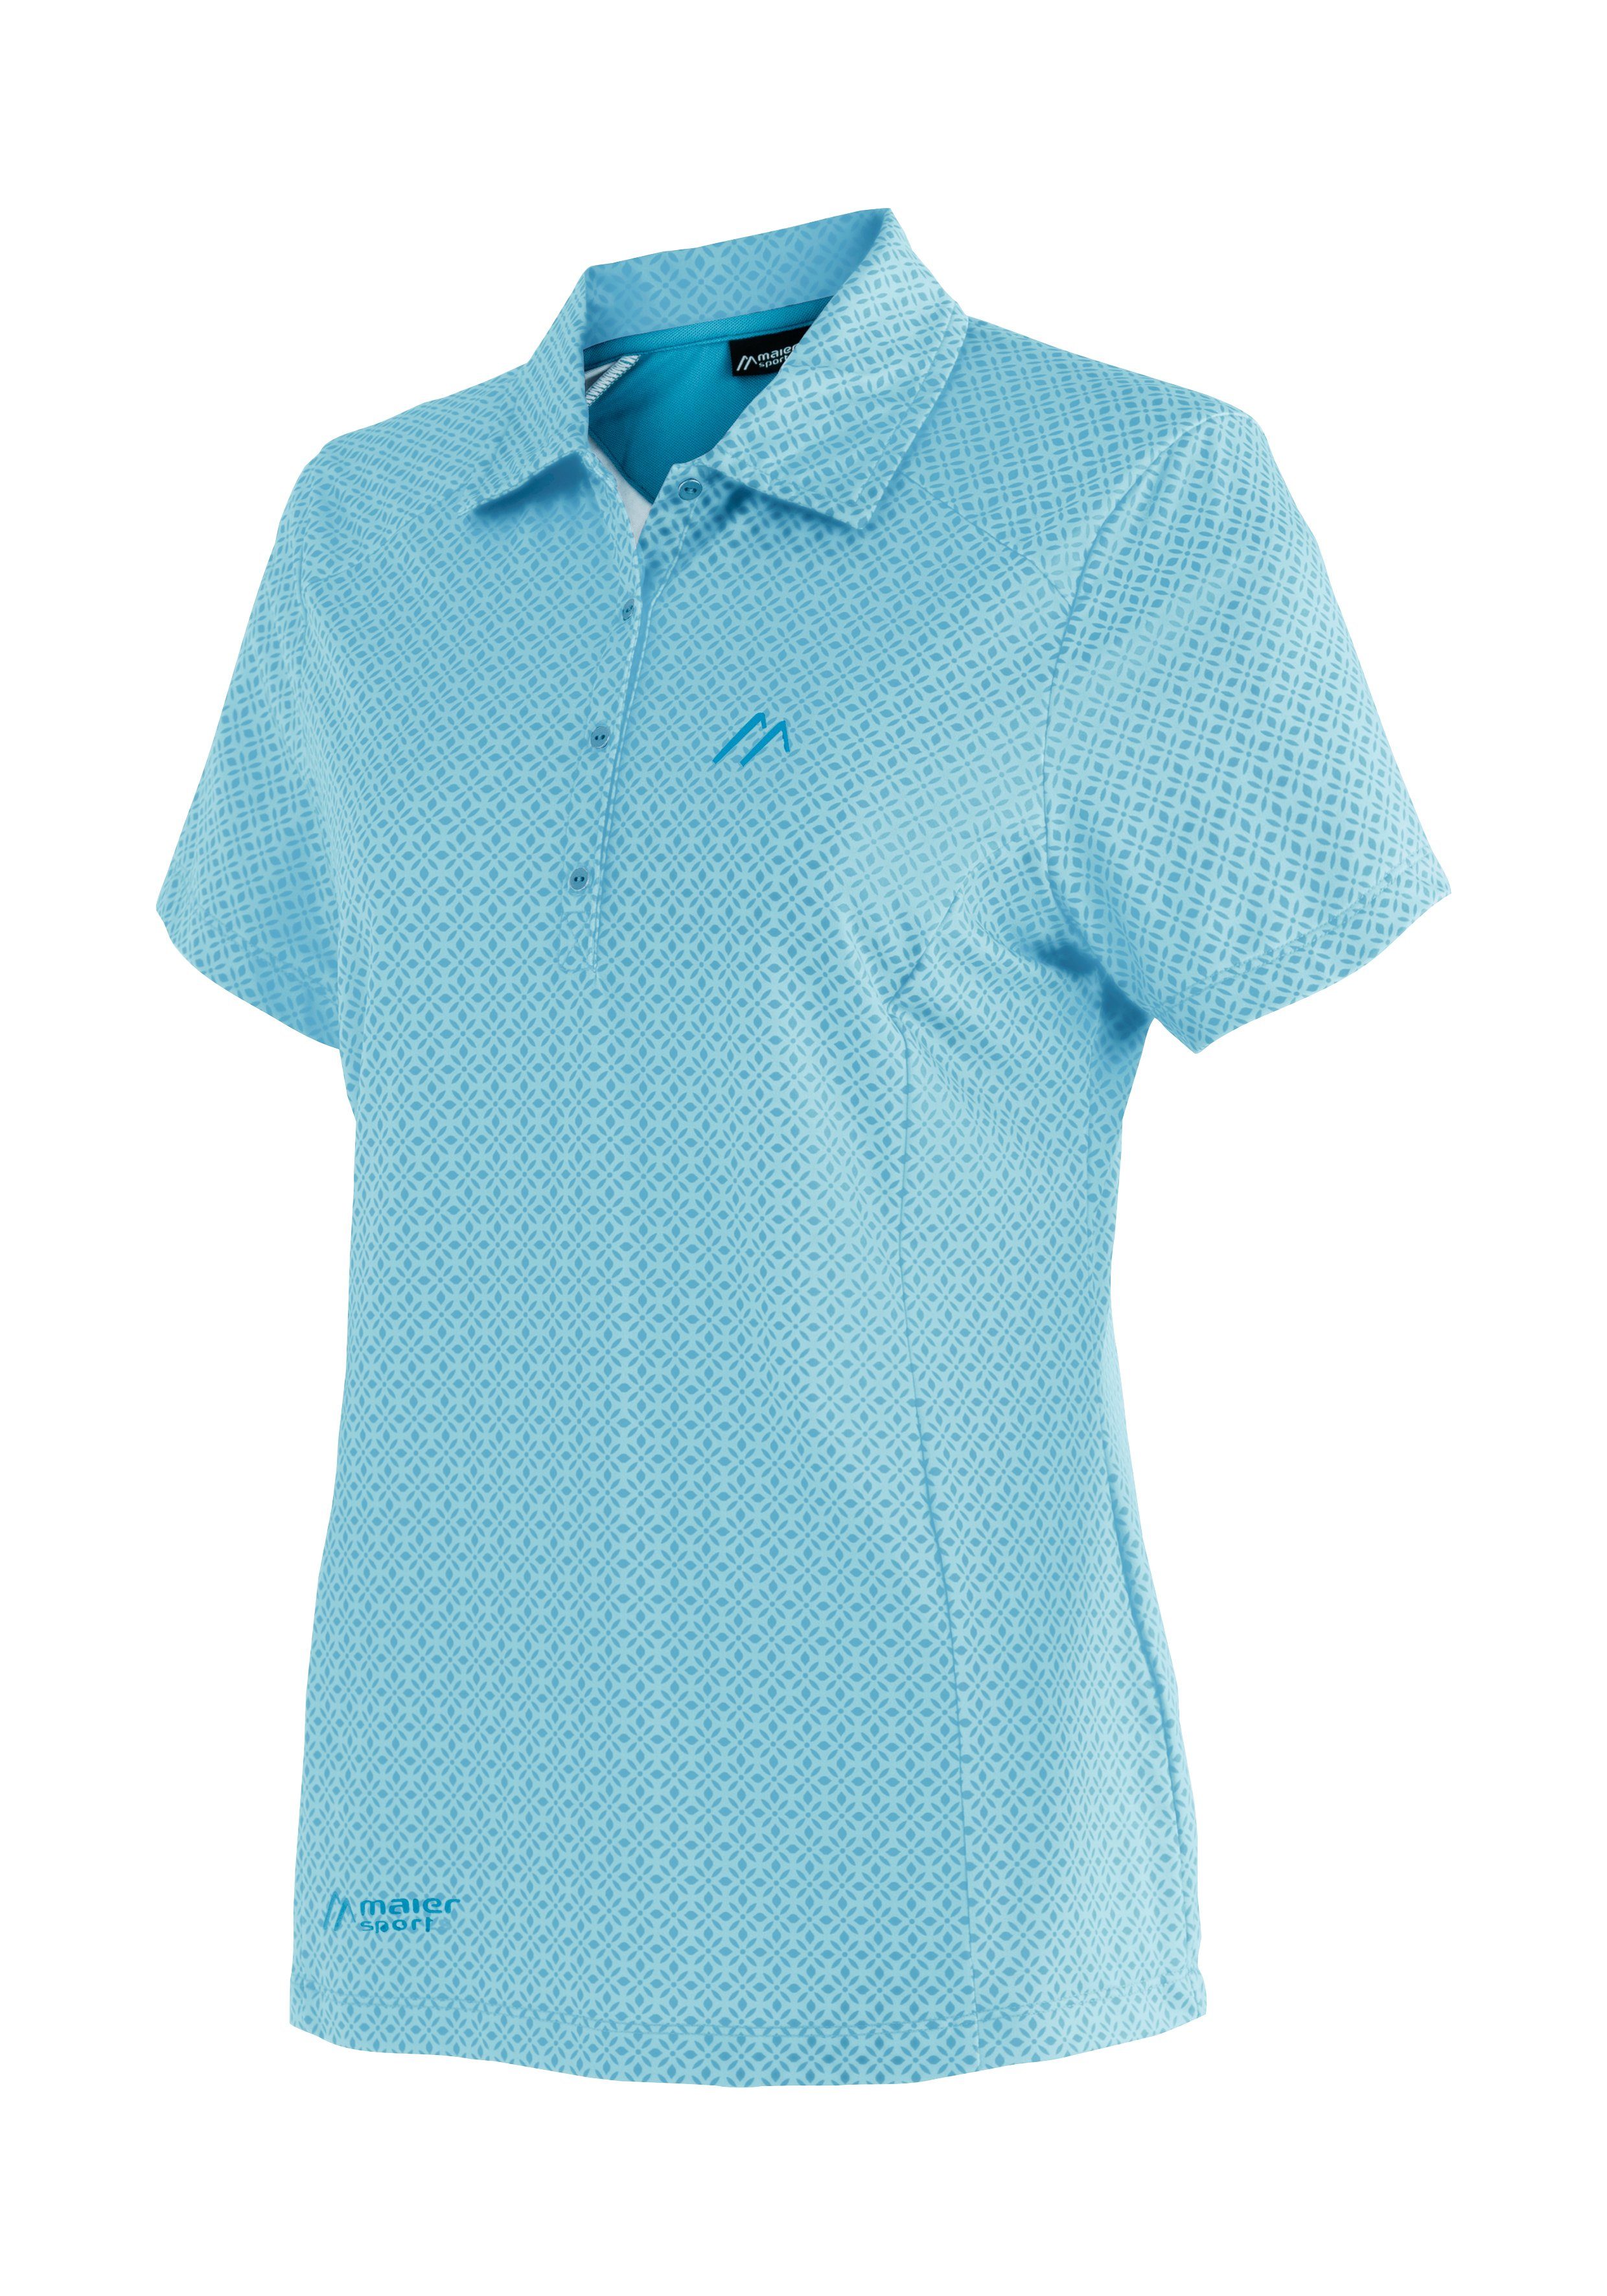 Maier Sports Funktionsshirt Polo-Shirt Damen Pandy W Hemdkragen mit babyblau